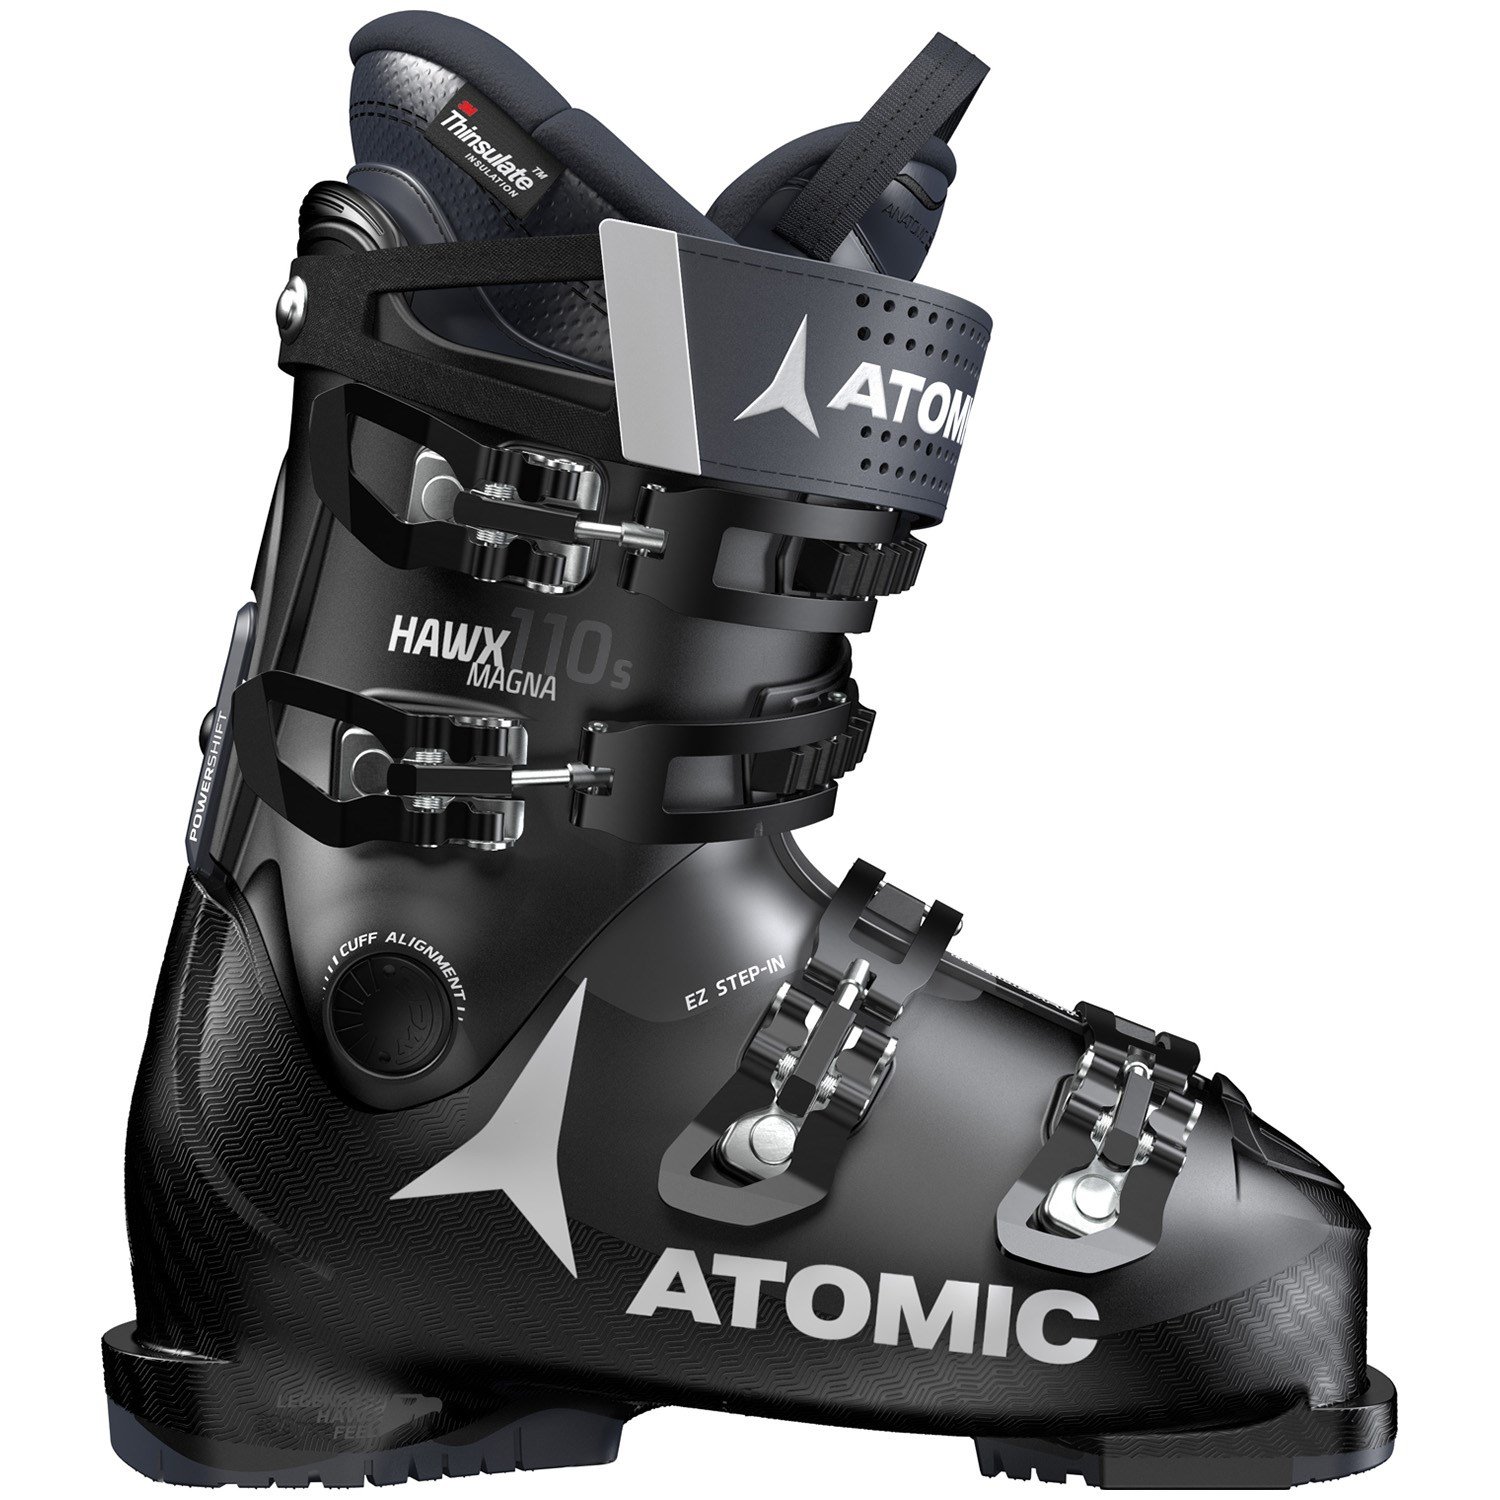 Atomic Hawx Magna 110 S Ski Boots 2020 